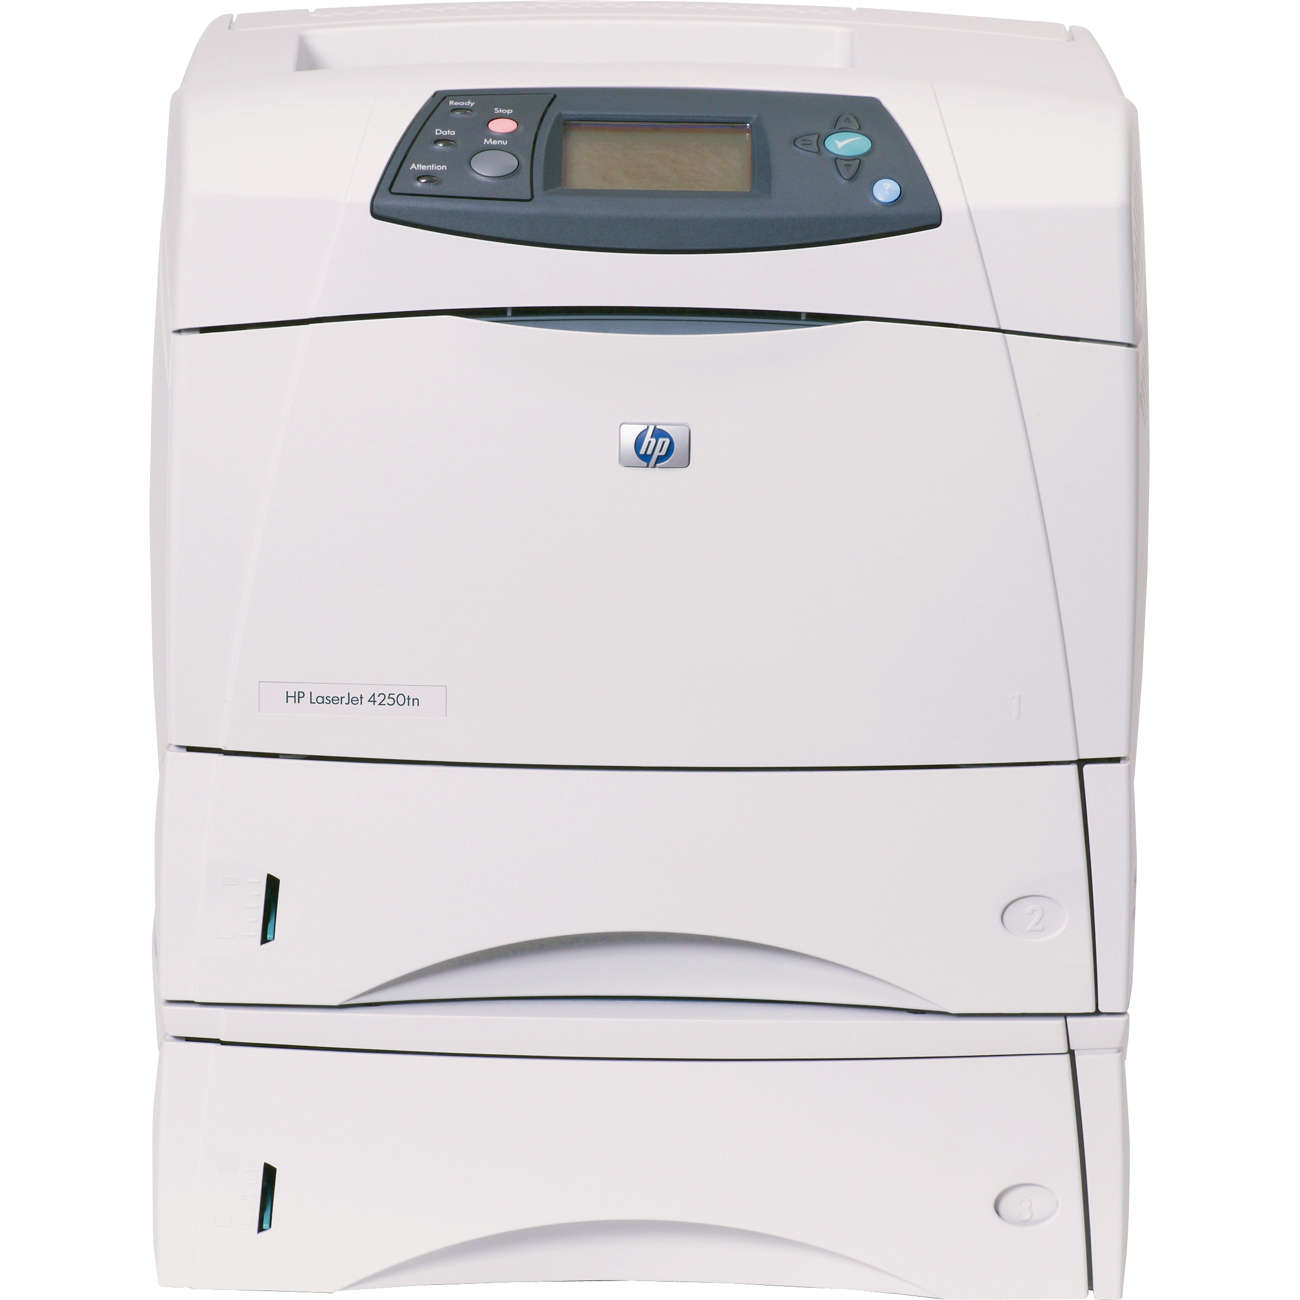 Refurbished printer HP 4250tn - (HP4250TN)